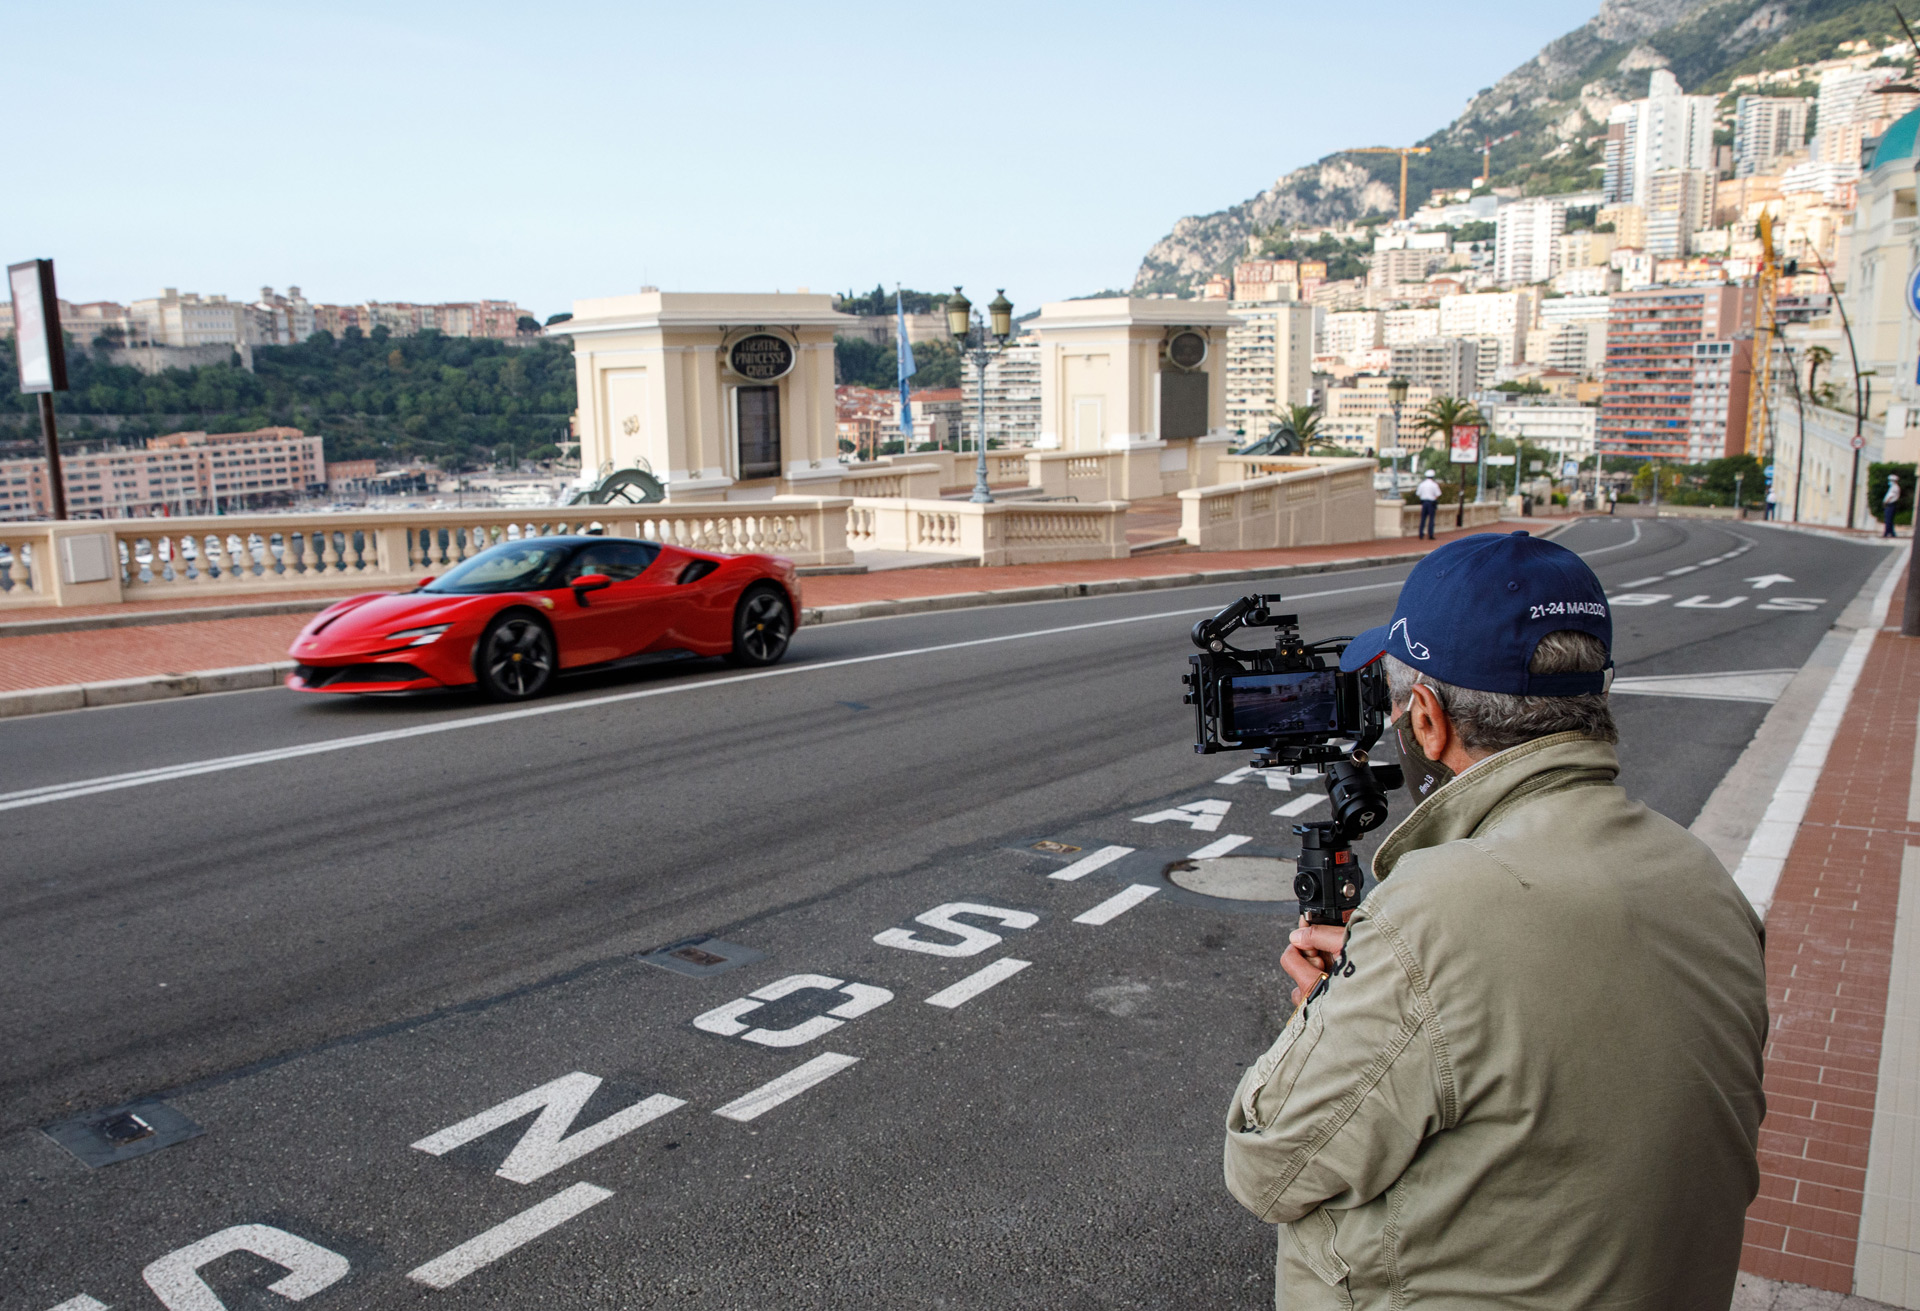 2019 - [Ferrari] SF90 Stradale - Page 4 Ferrari-sf90-during-filming-of-le-grand-rendez-vous-in-monaco_100747590_h